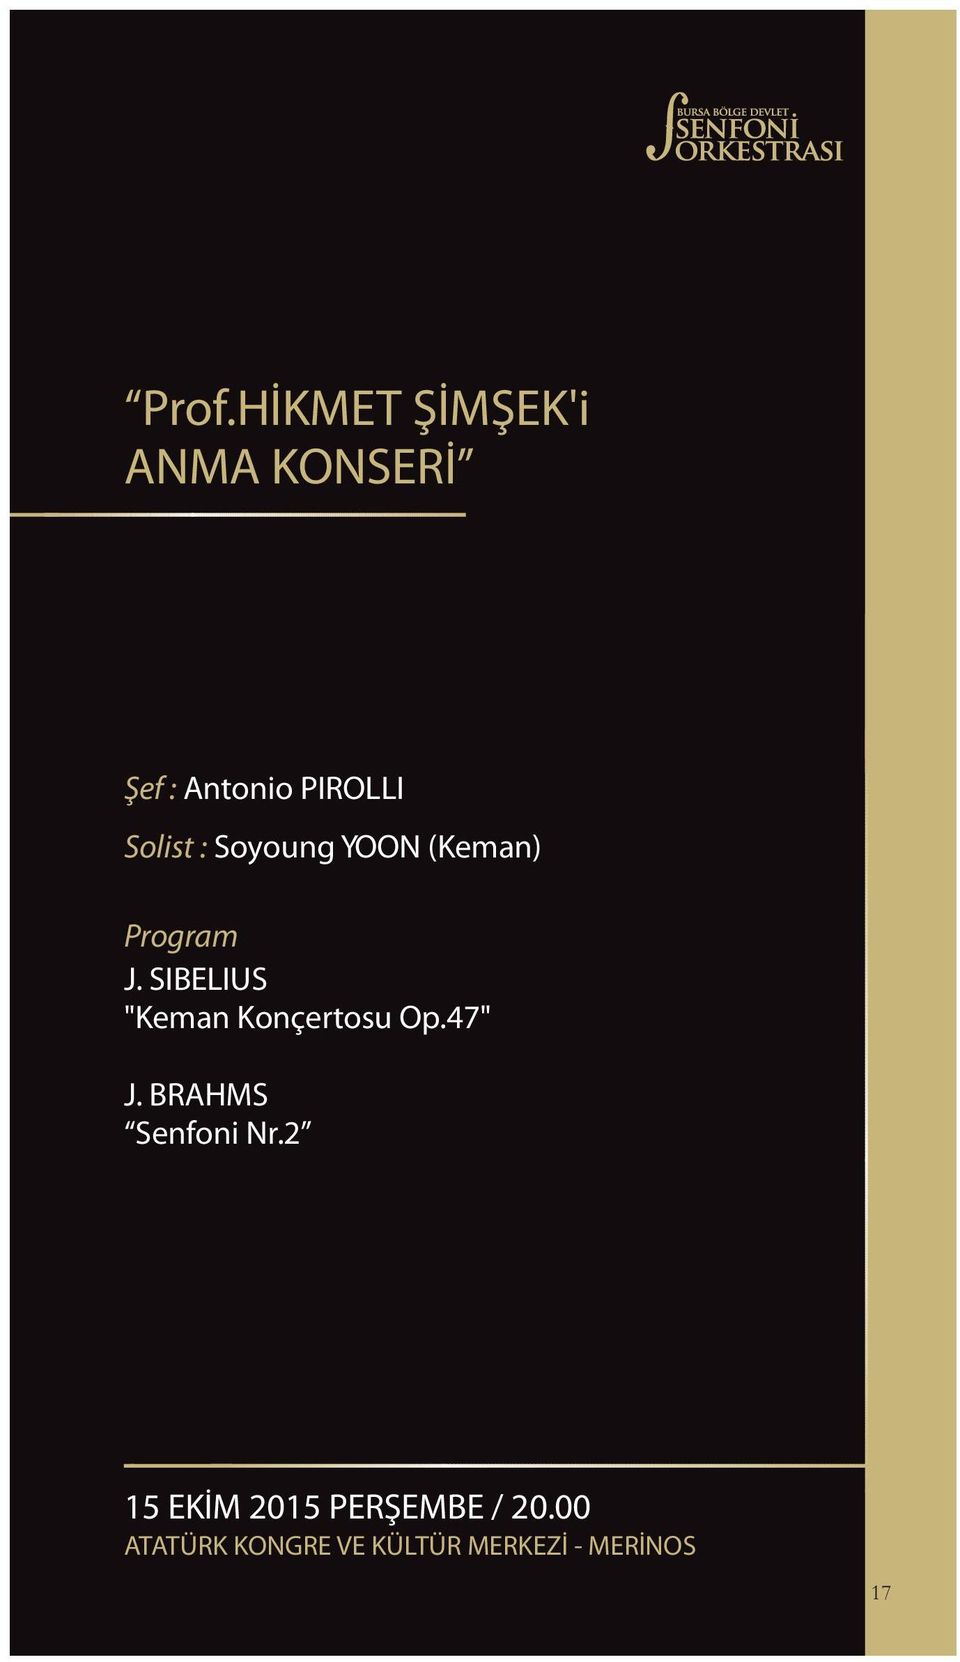 SIBELIUS "Keman Konçertosu Op.47" J. BRAHMS Senfoni Nr.